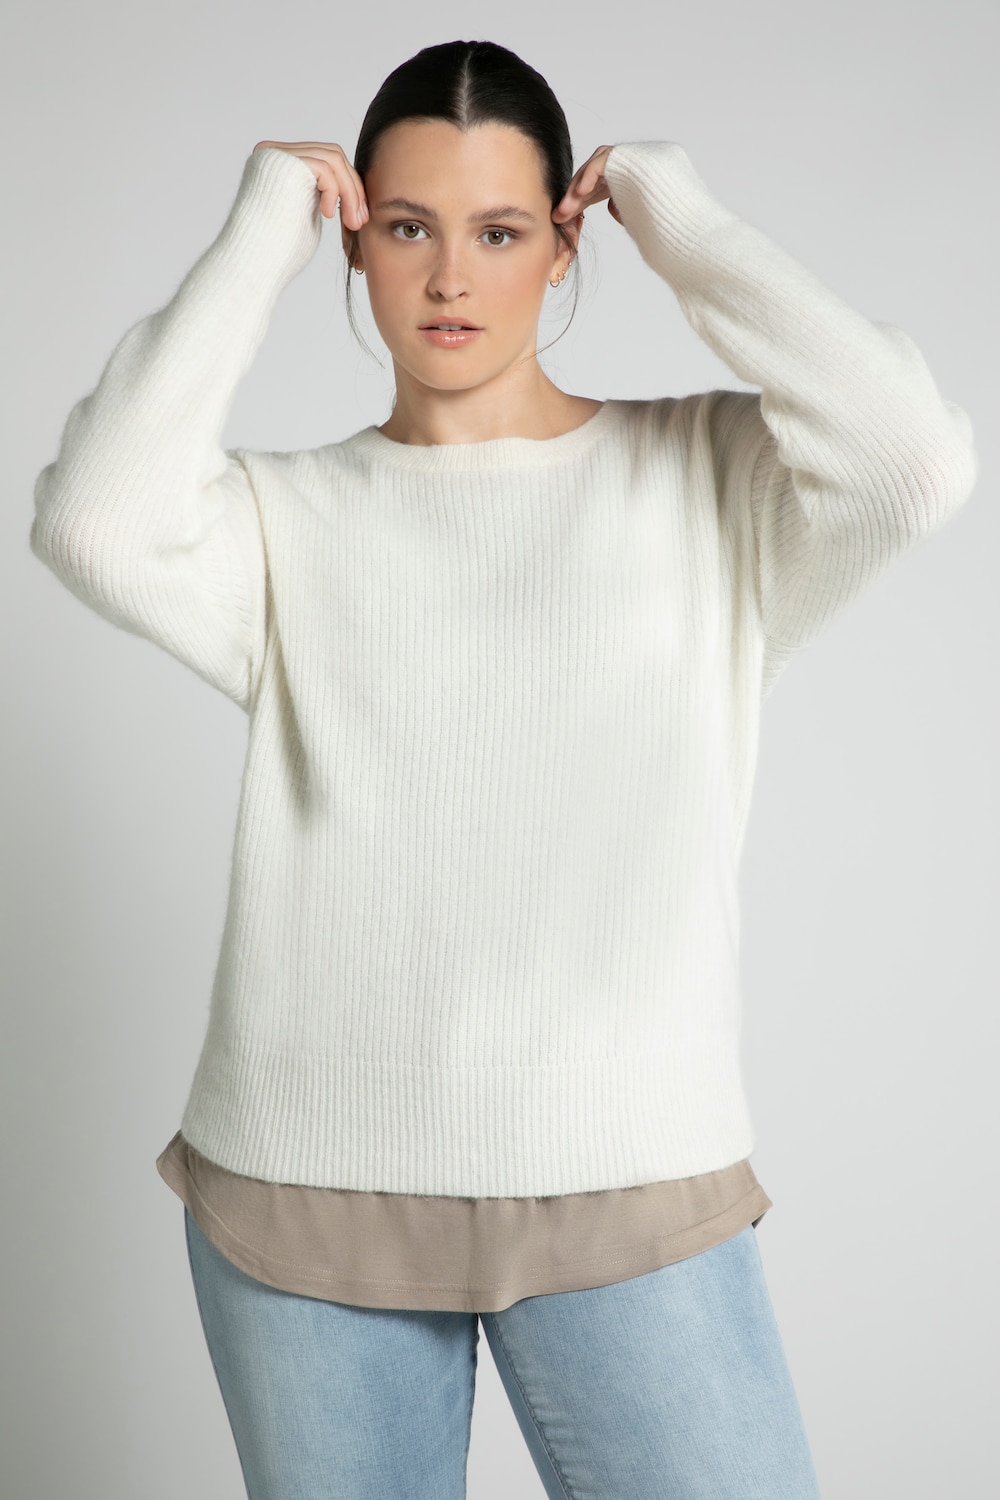 Plus Size Soft Rib Knit Sweater, Woman, beige, size: 16/18, synthetic fibers/wool, Studio Untold